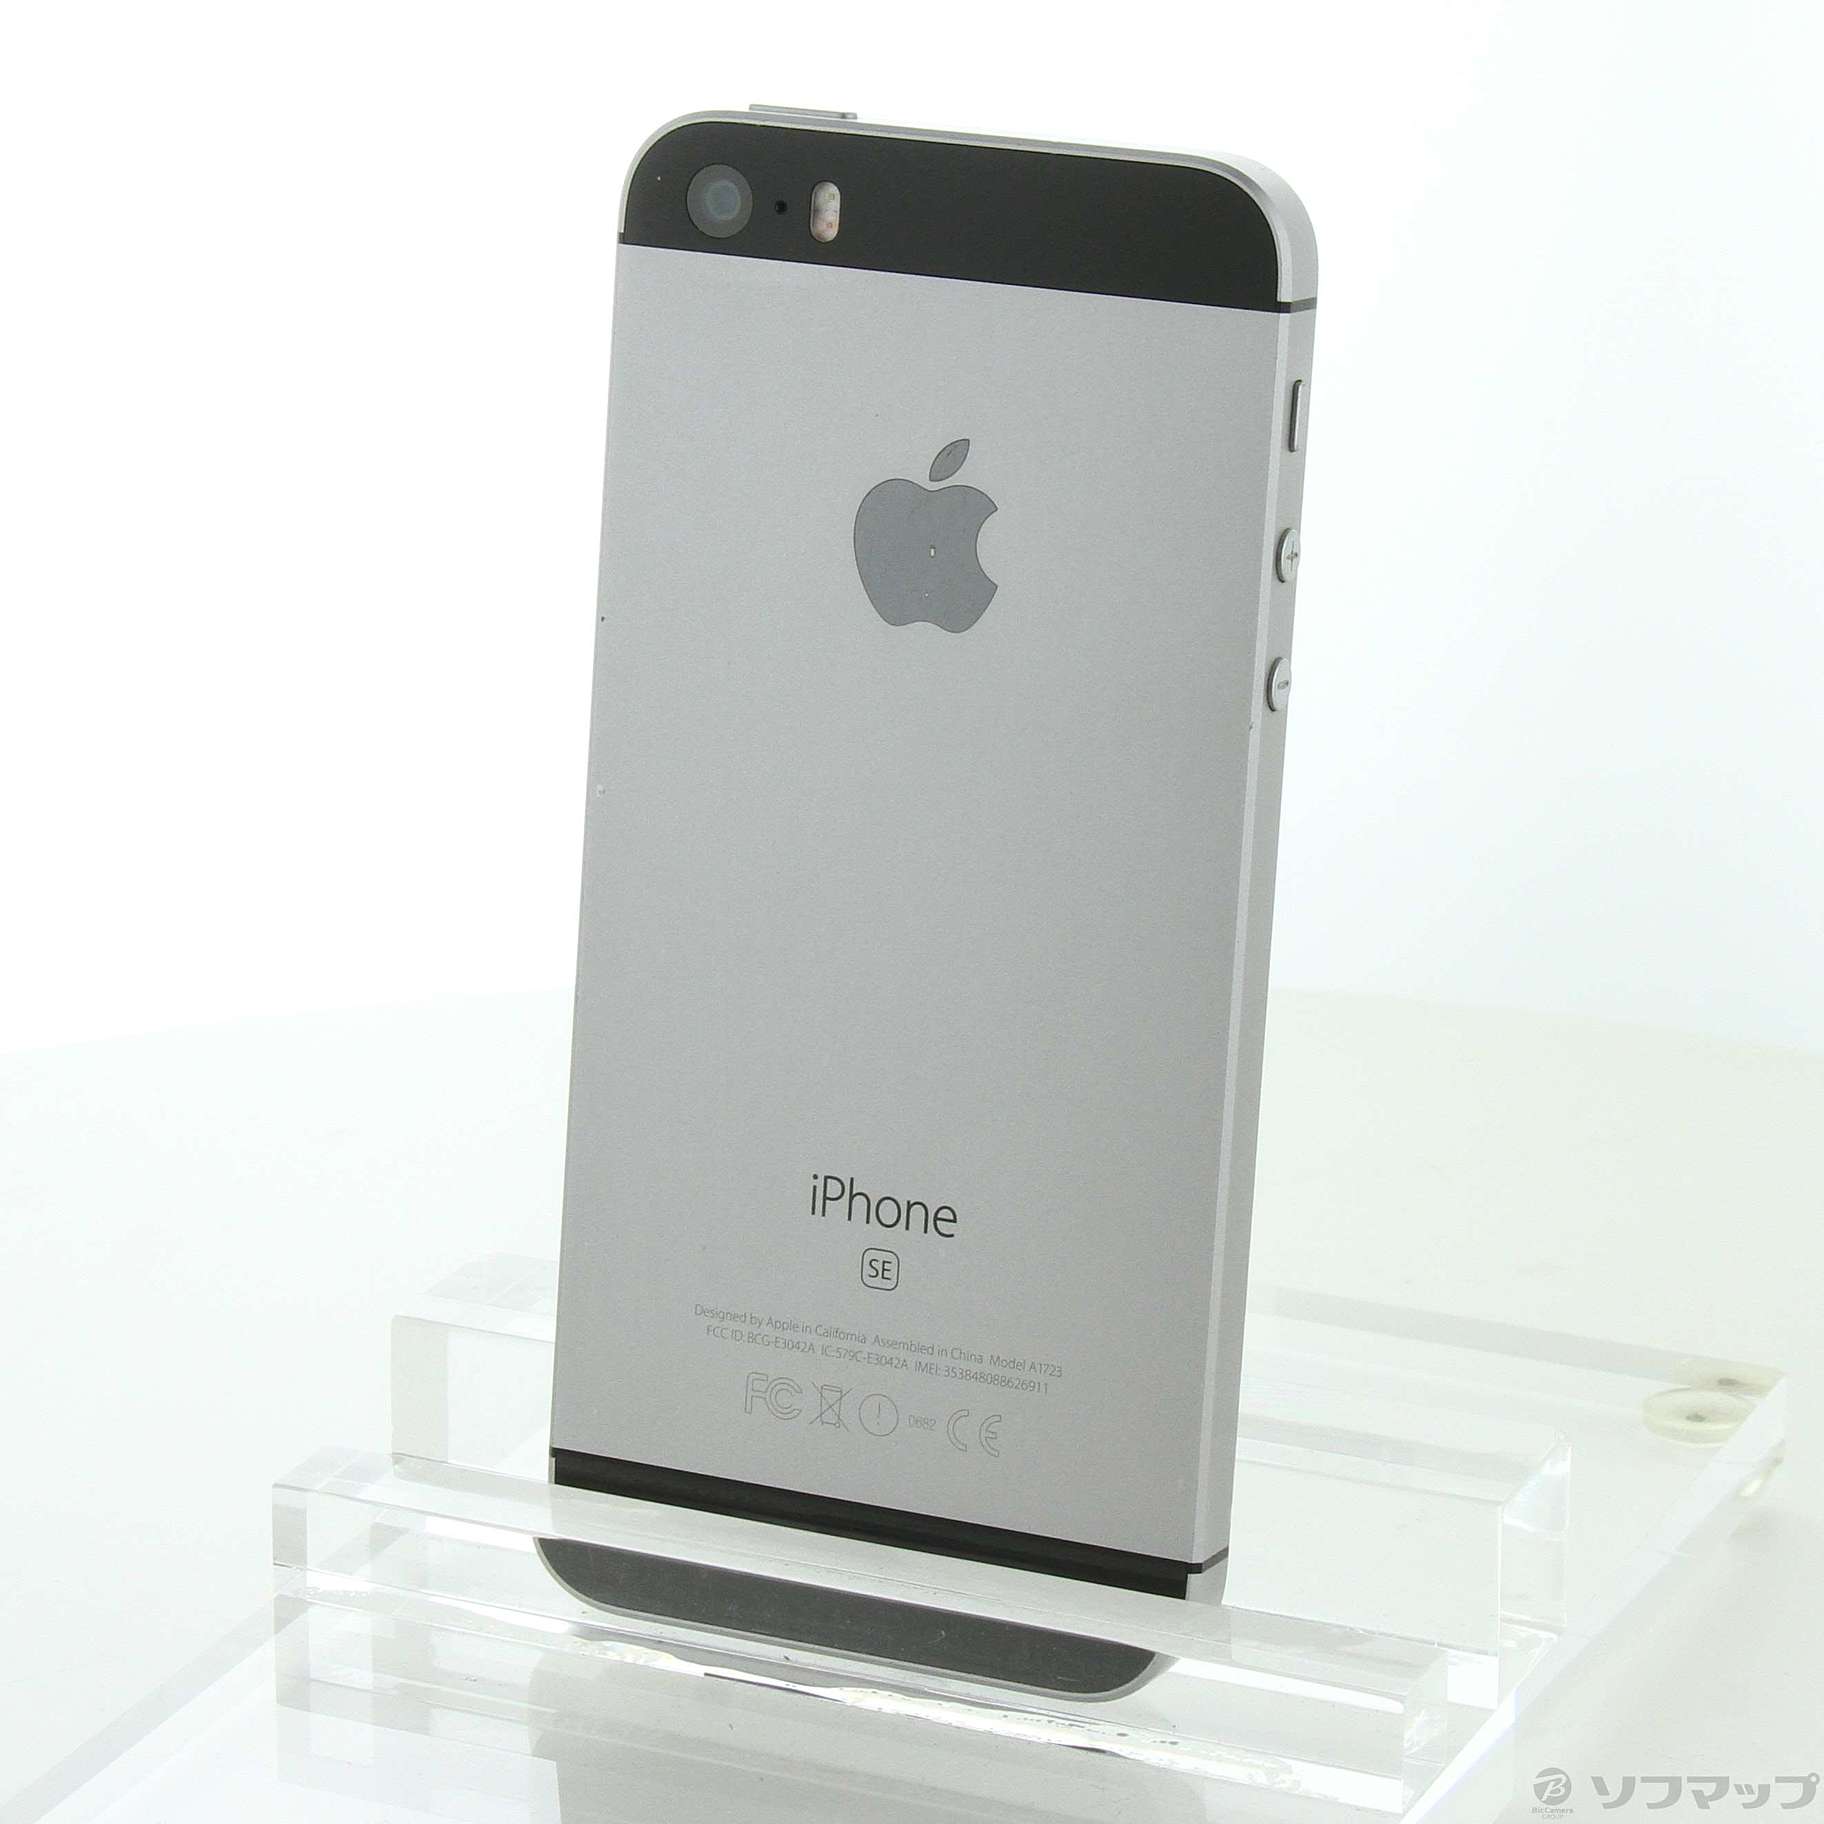 iPhone SE space gray 32 GB SIM フリー